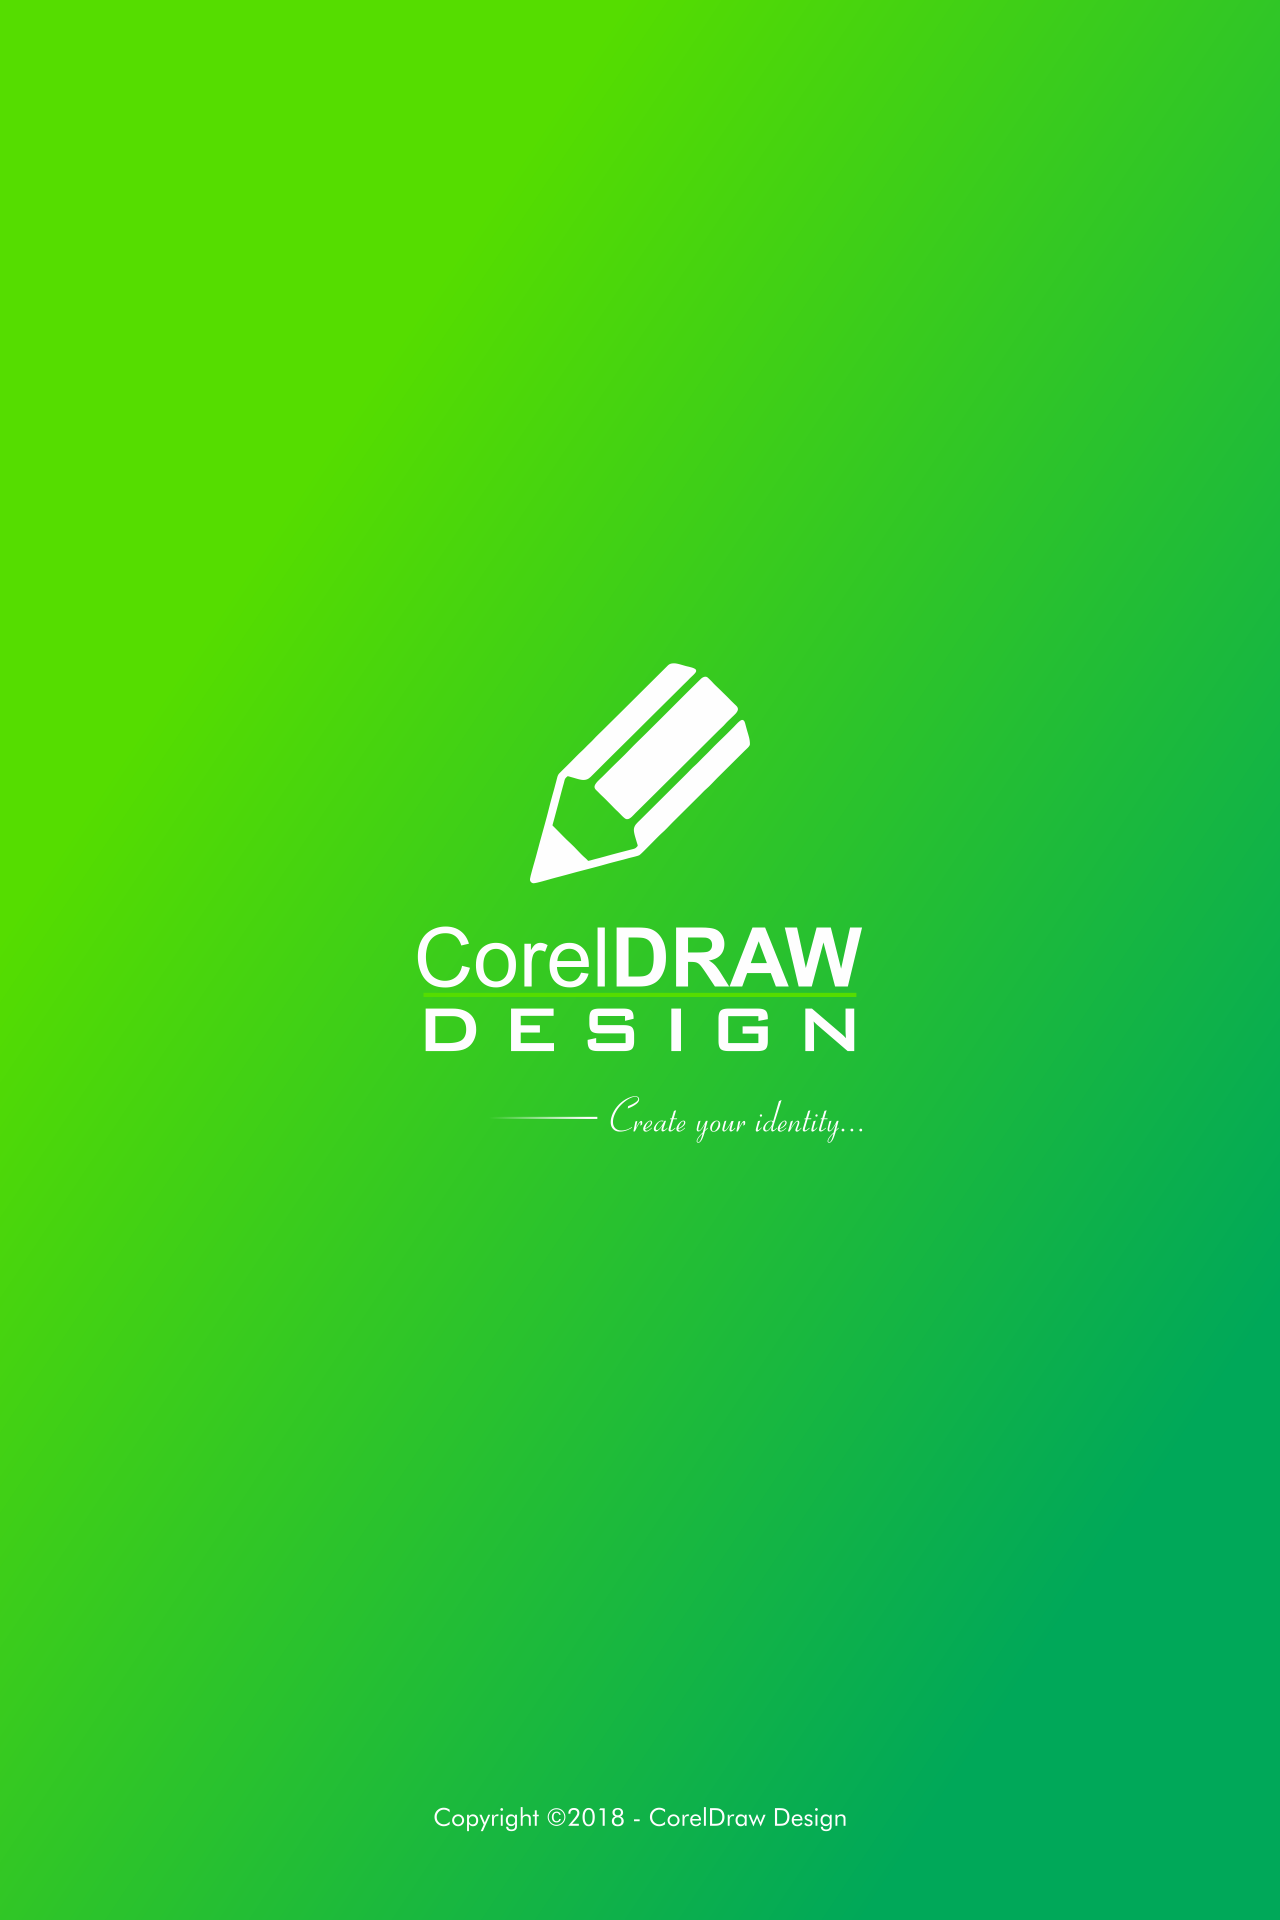 coreldraw-design-free-cdr-templates-apk-1-3-for-android-download-coreldraw-design-free-cdr